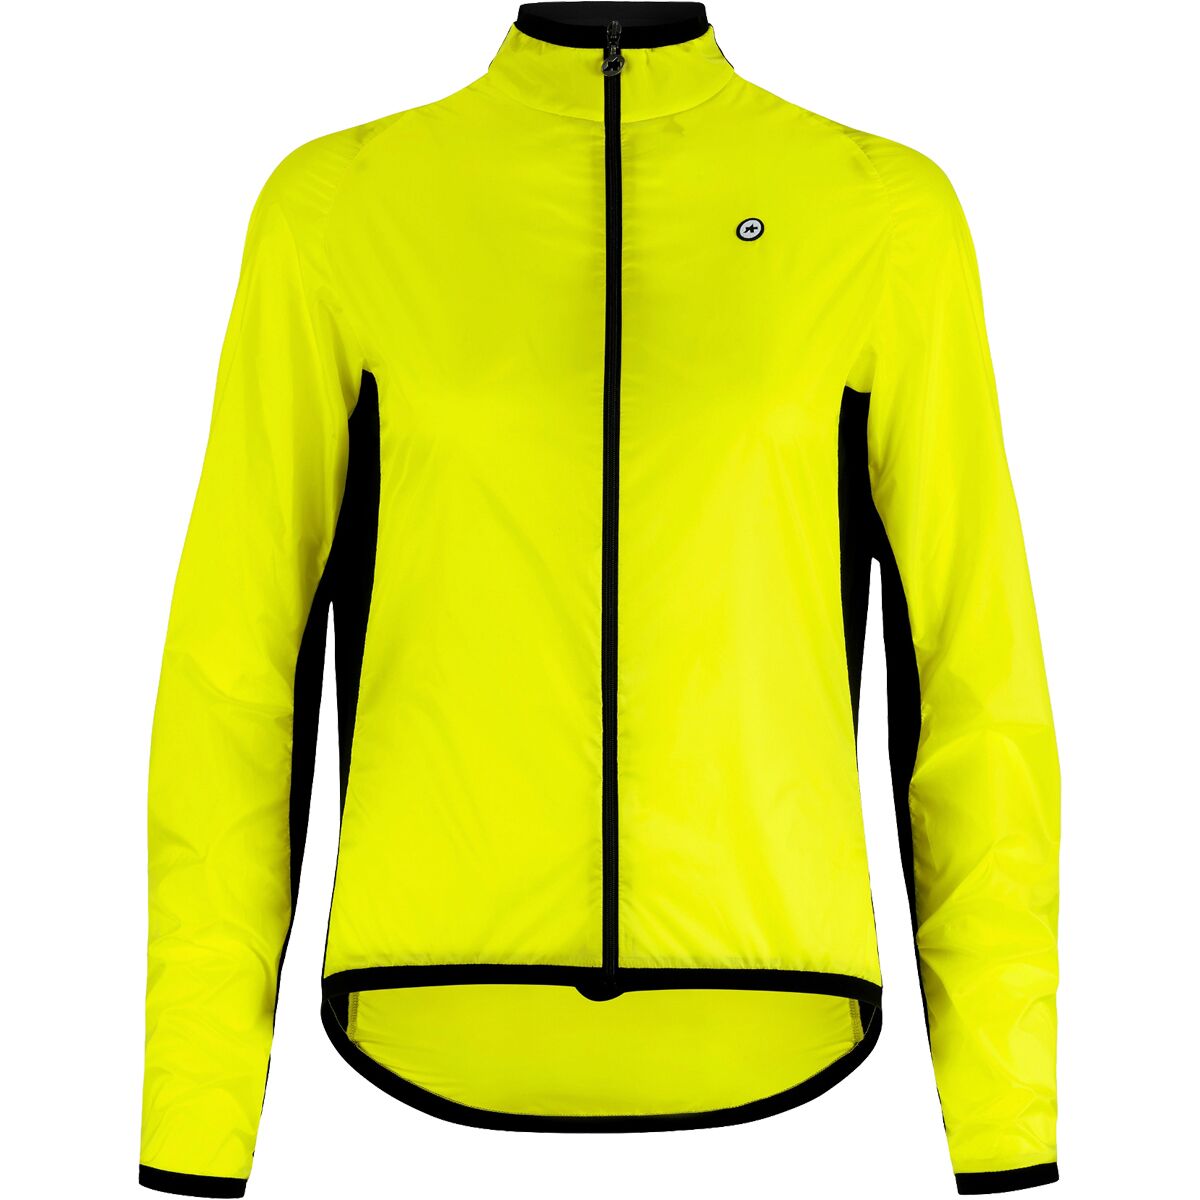 Assos UMA GT Wind Jacket C2 - Women's Optic Yellow, M